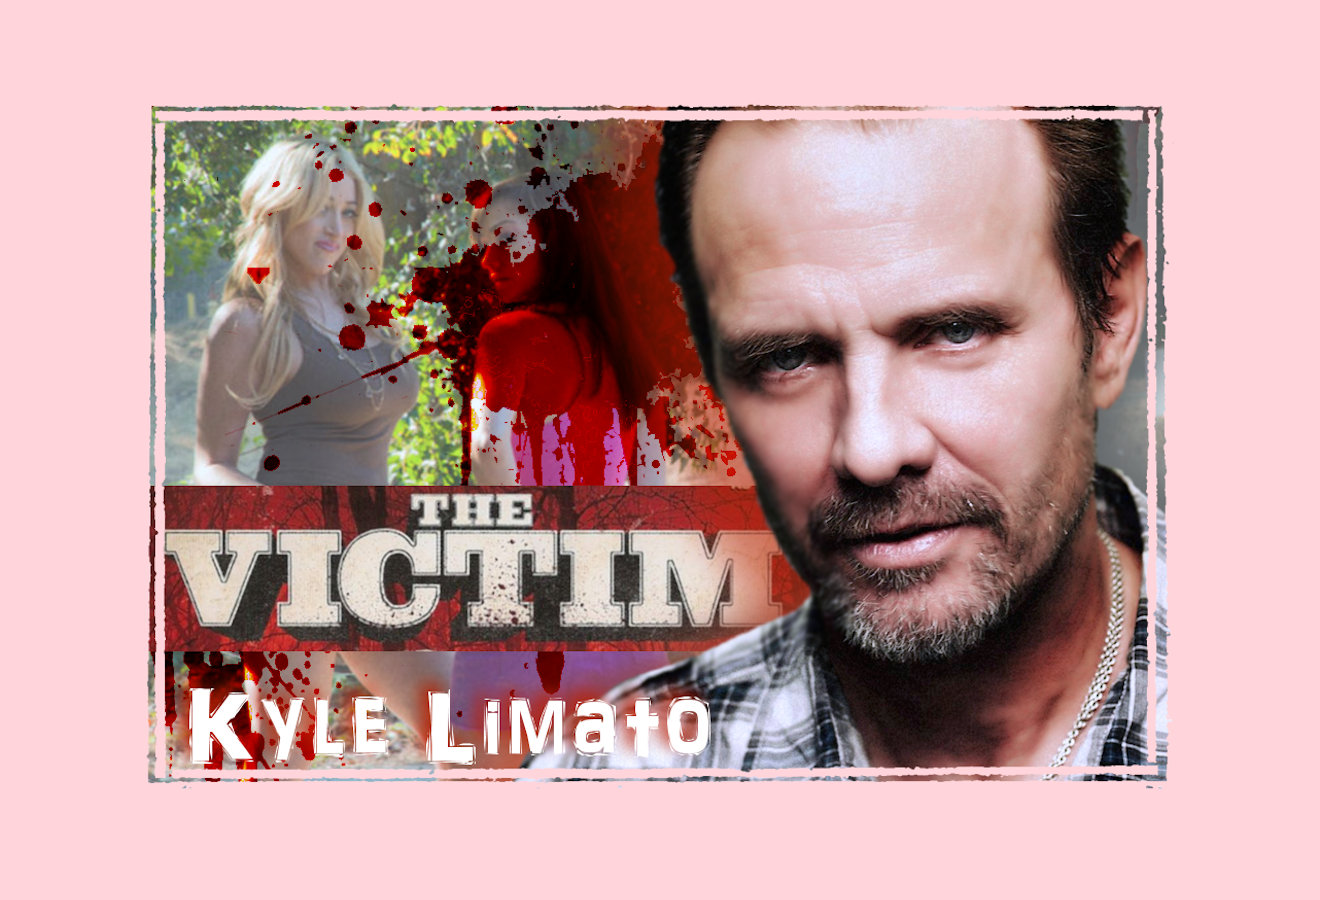 The Victim - Kyle Limato by Tarlan
Created for michaelbiehn challenge February 2017
Keywords: victim_wpr;victim_art